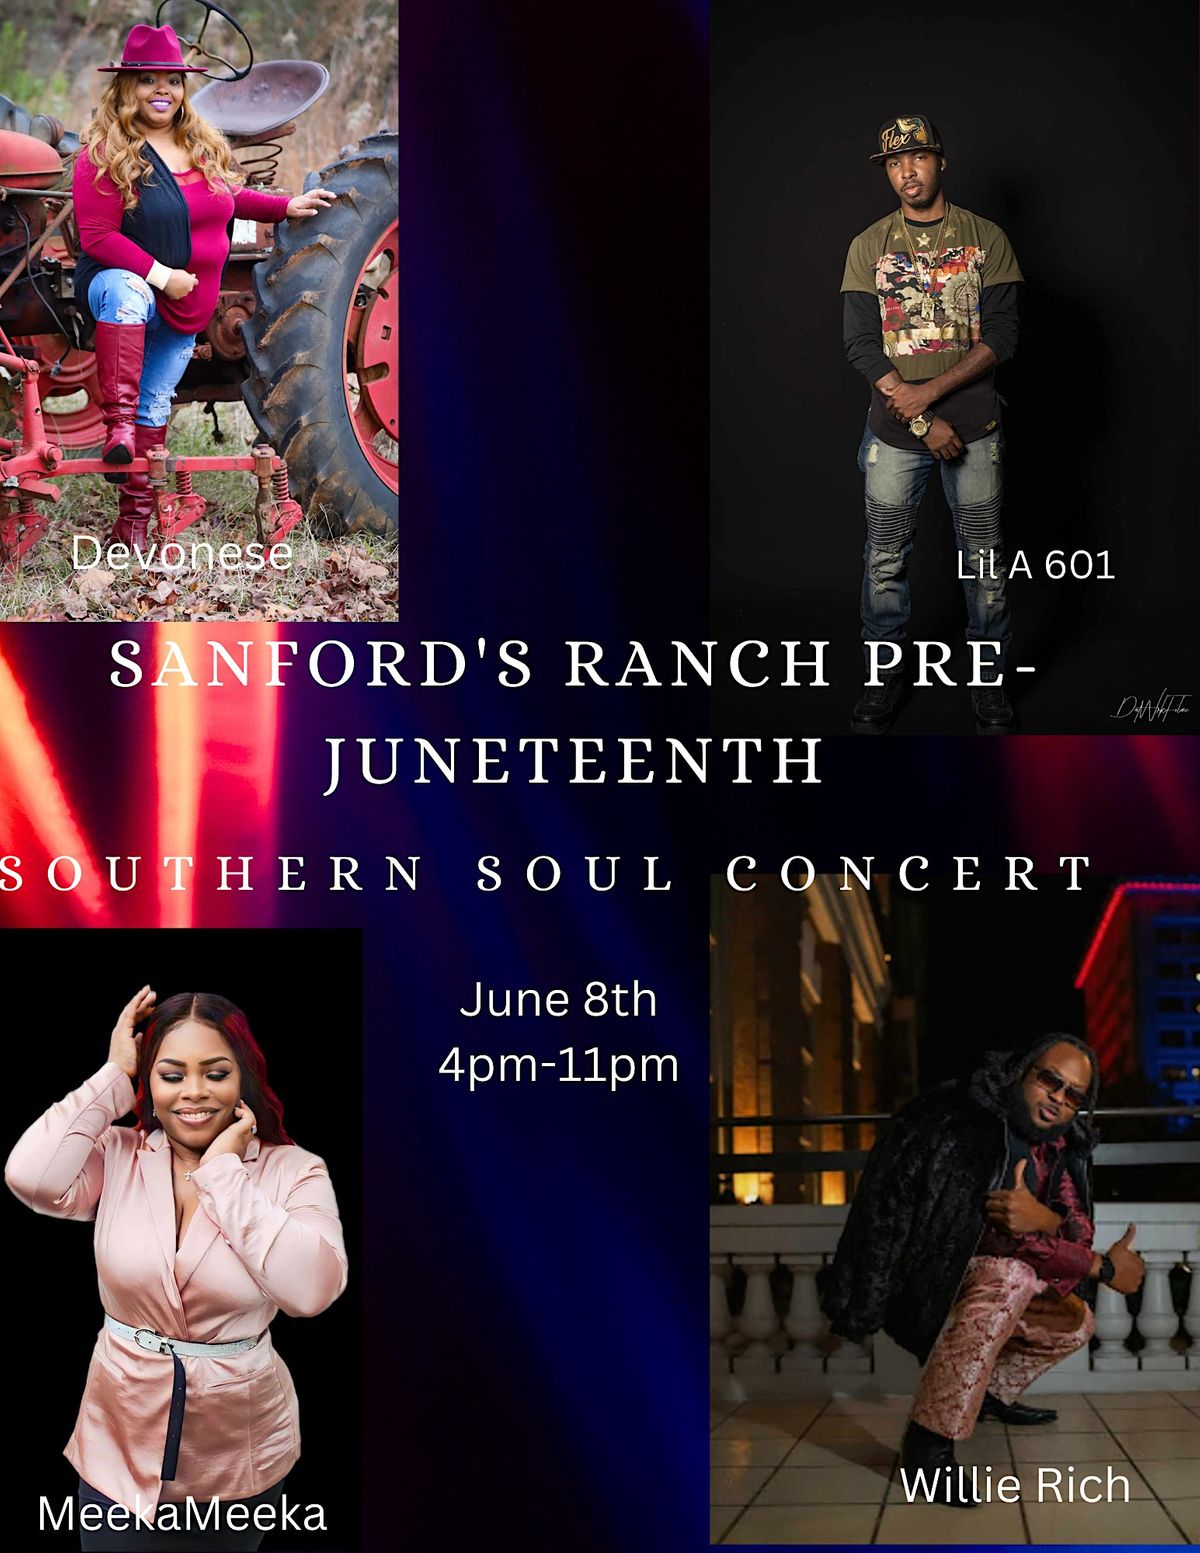 Sanford's Ranch Pre-Juneteenth Southern Soul Concert